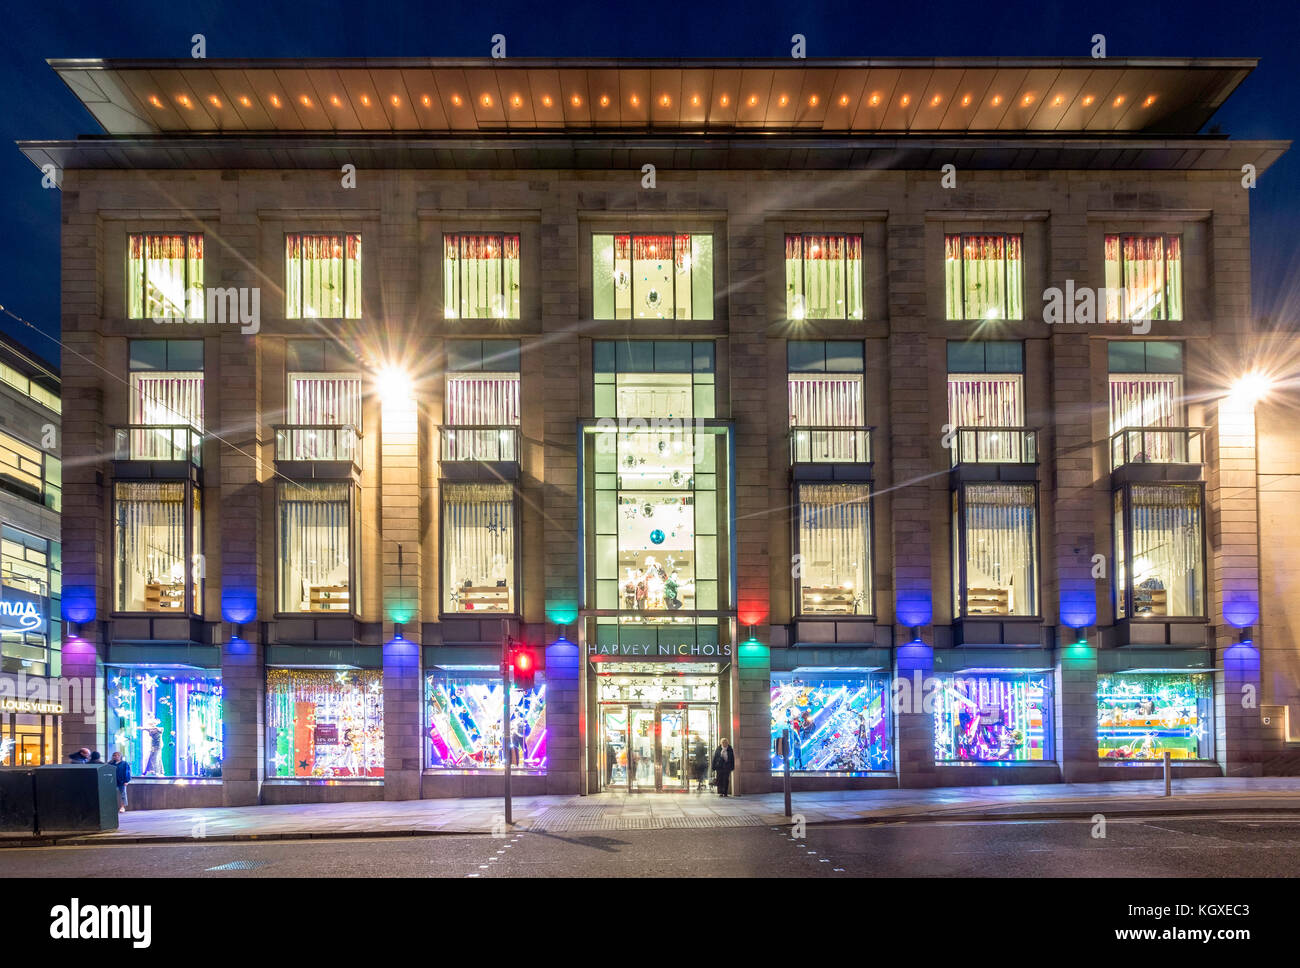 Night view of exterior of Harvey Nichols store in St Andrews Square in Edinburgh, Scotland, United Kingdom. Stock Photo